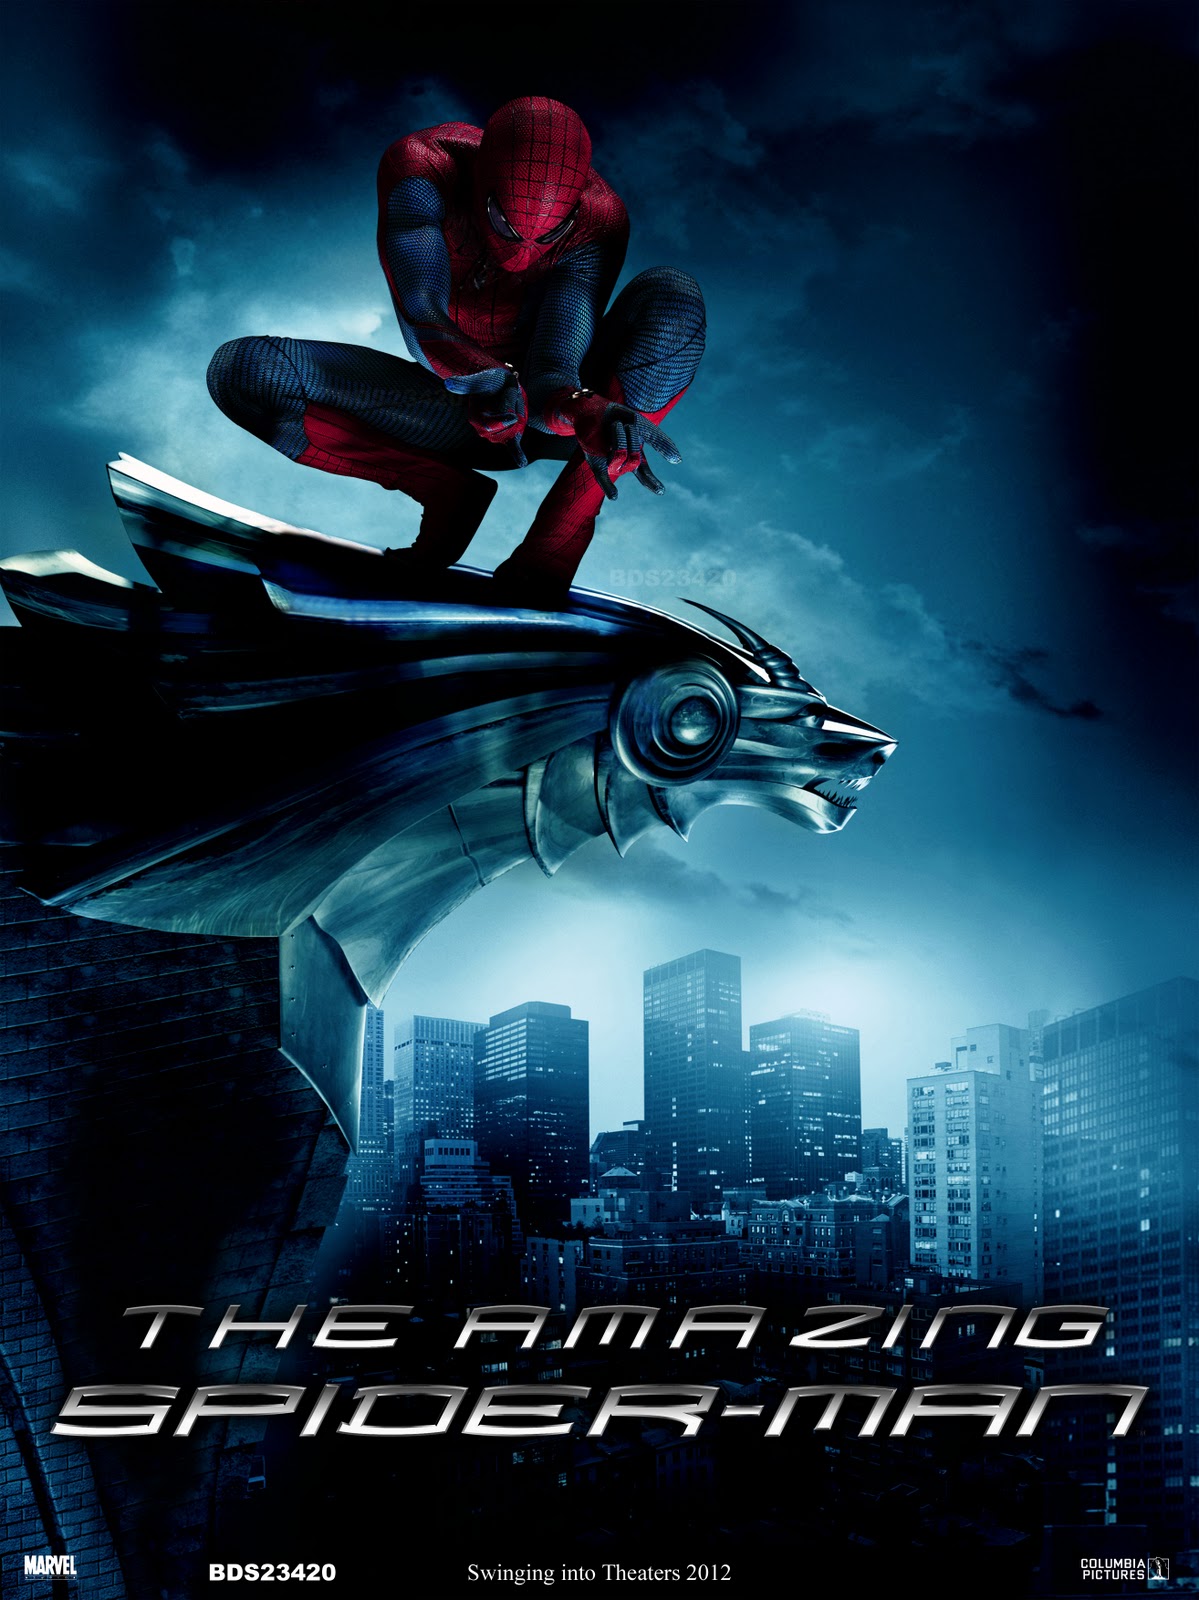 https://blogger.googleusercontent.com/img/b/R29vZ2xl/AVvXsEhlvrgu-fb1w547qs4bMxlOeTz8J8j9VmbQdrCyId5UXinB0VCXoUaOVHRHMbK5dv3BiqRk2trjsUxDrpHlzic8dRk06zLJeTmAB0tlDSYqwVxhRHME_3WL_xHRKQerBp8QgWwIJrvJ1s4y/s1600/The-Amazing-Spider-Man-2012-movie-wallpaper.jpg